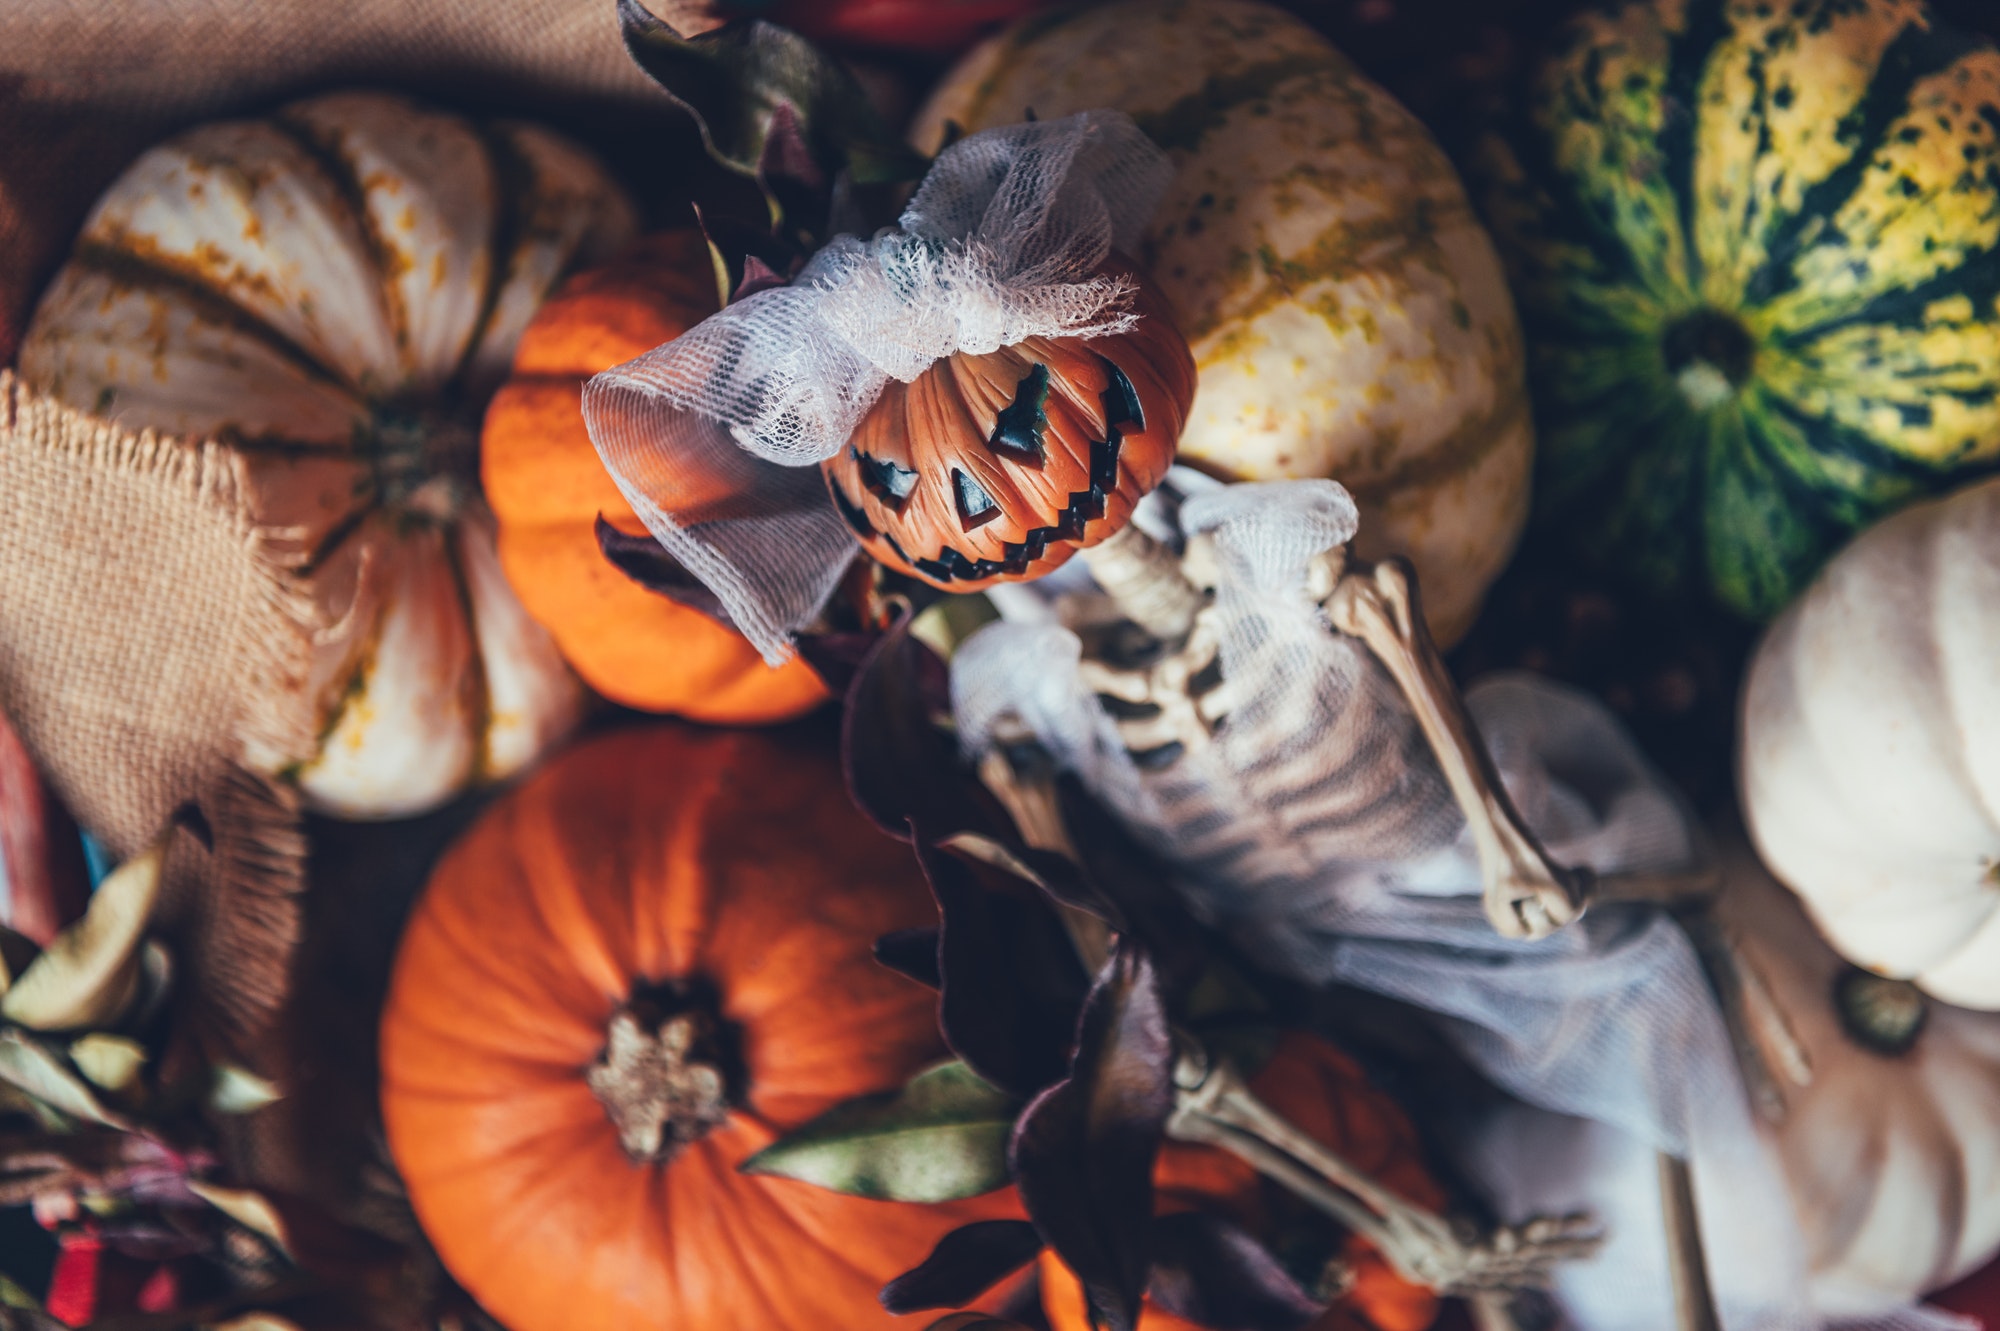 Pumpkins and skeleton pumpkin bride